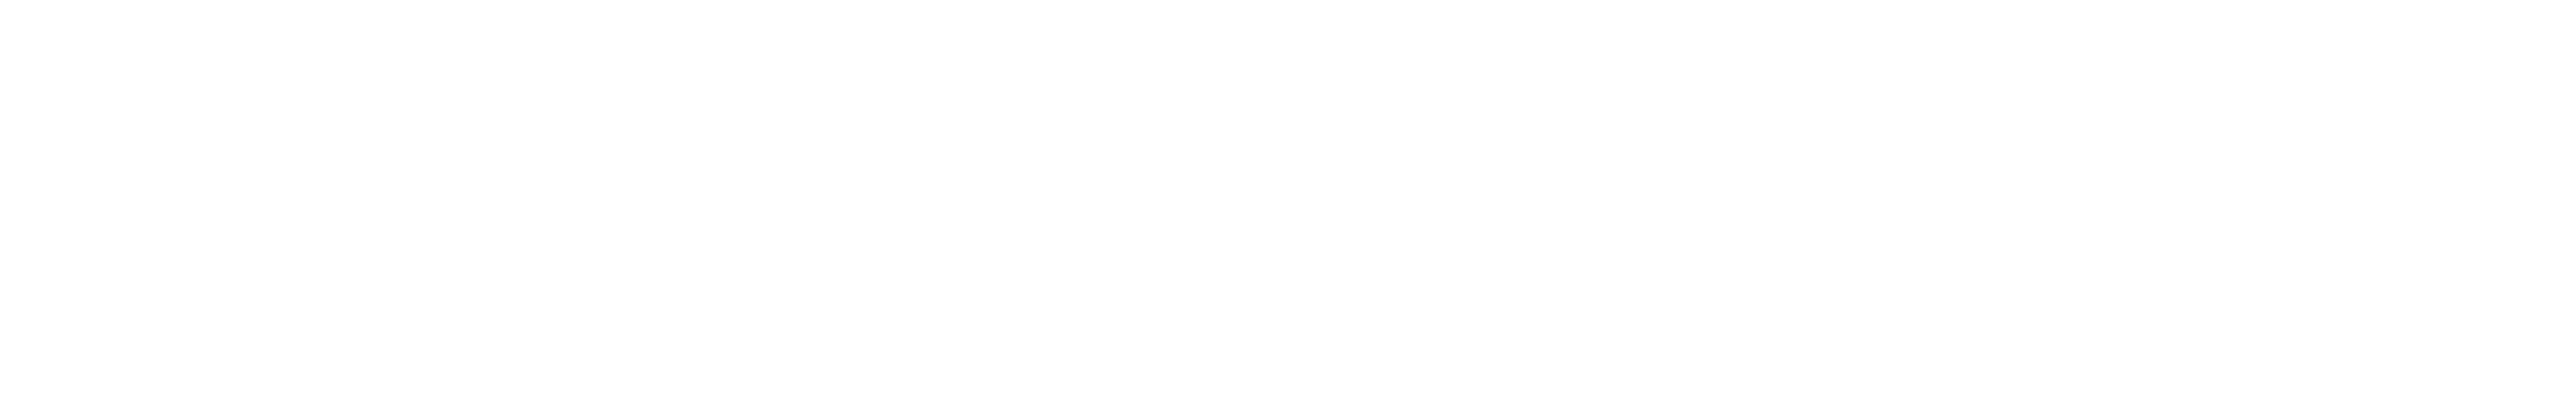 Religious Organizations category